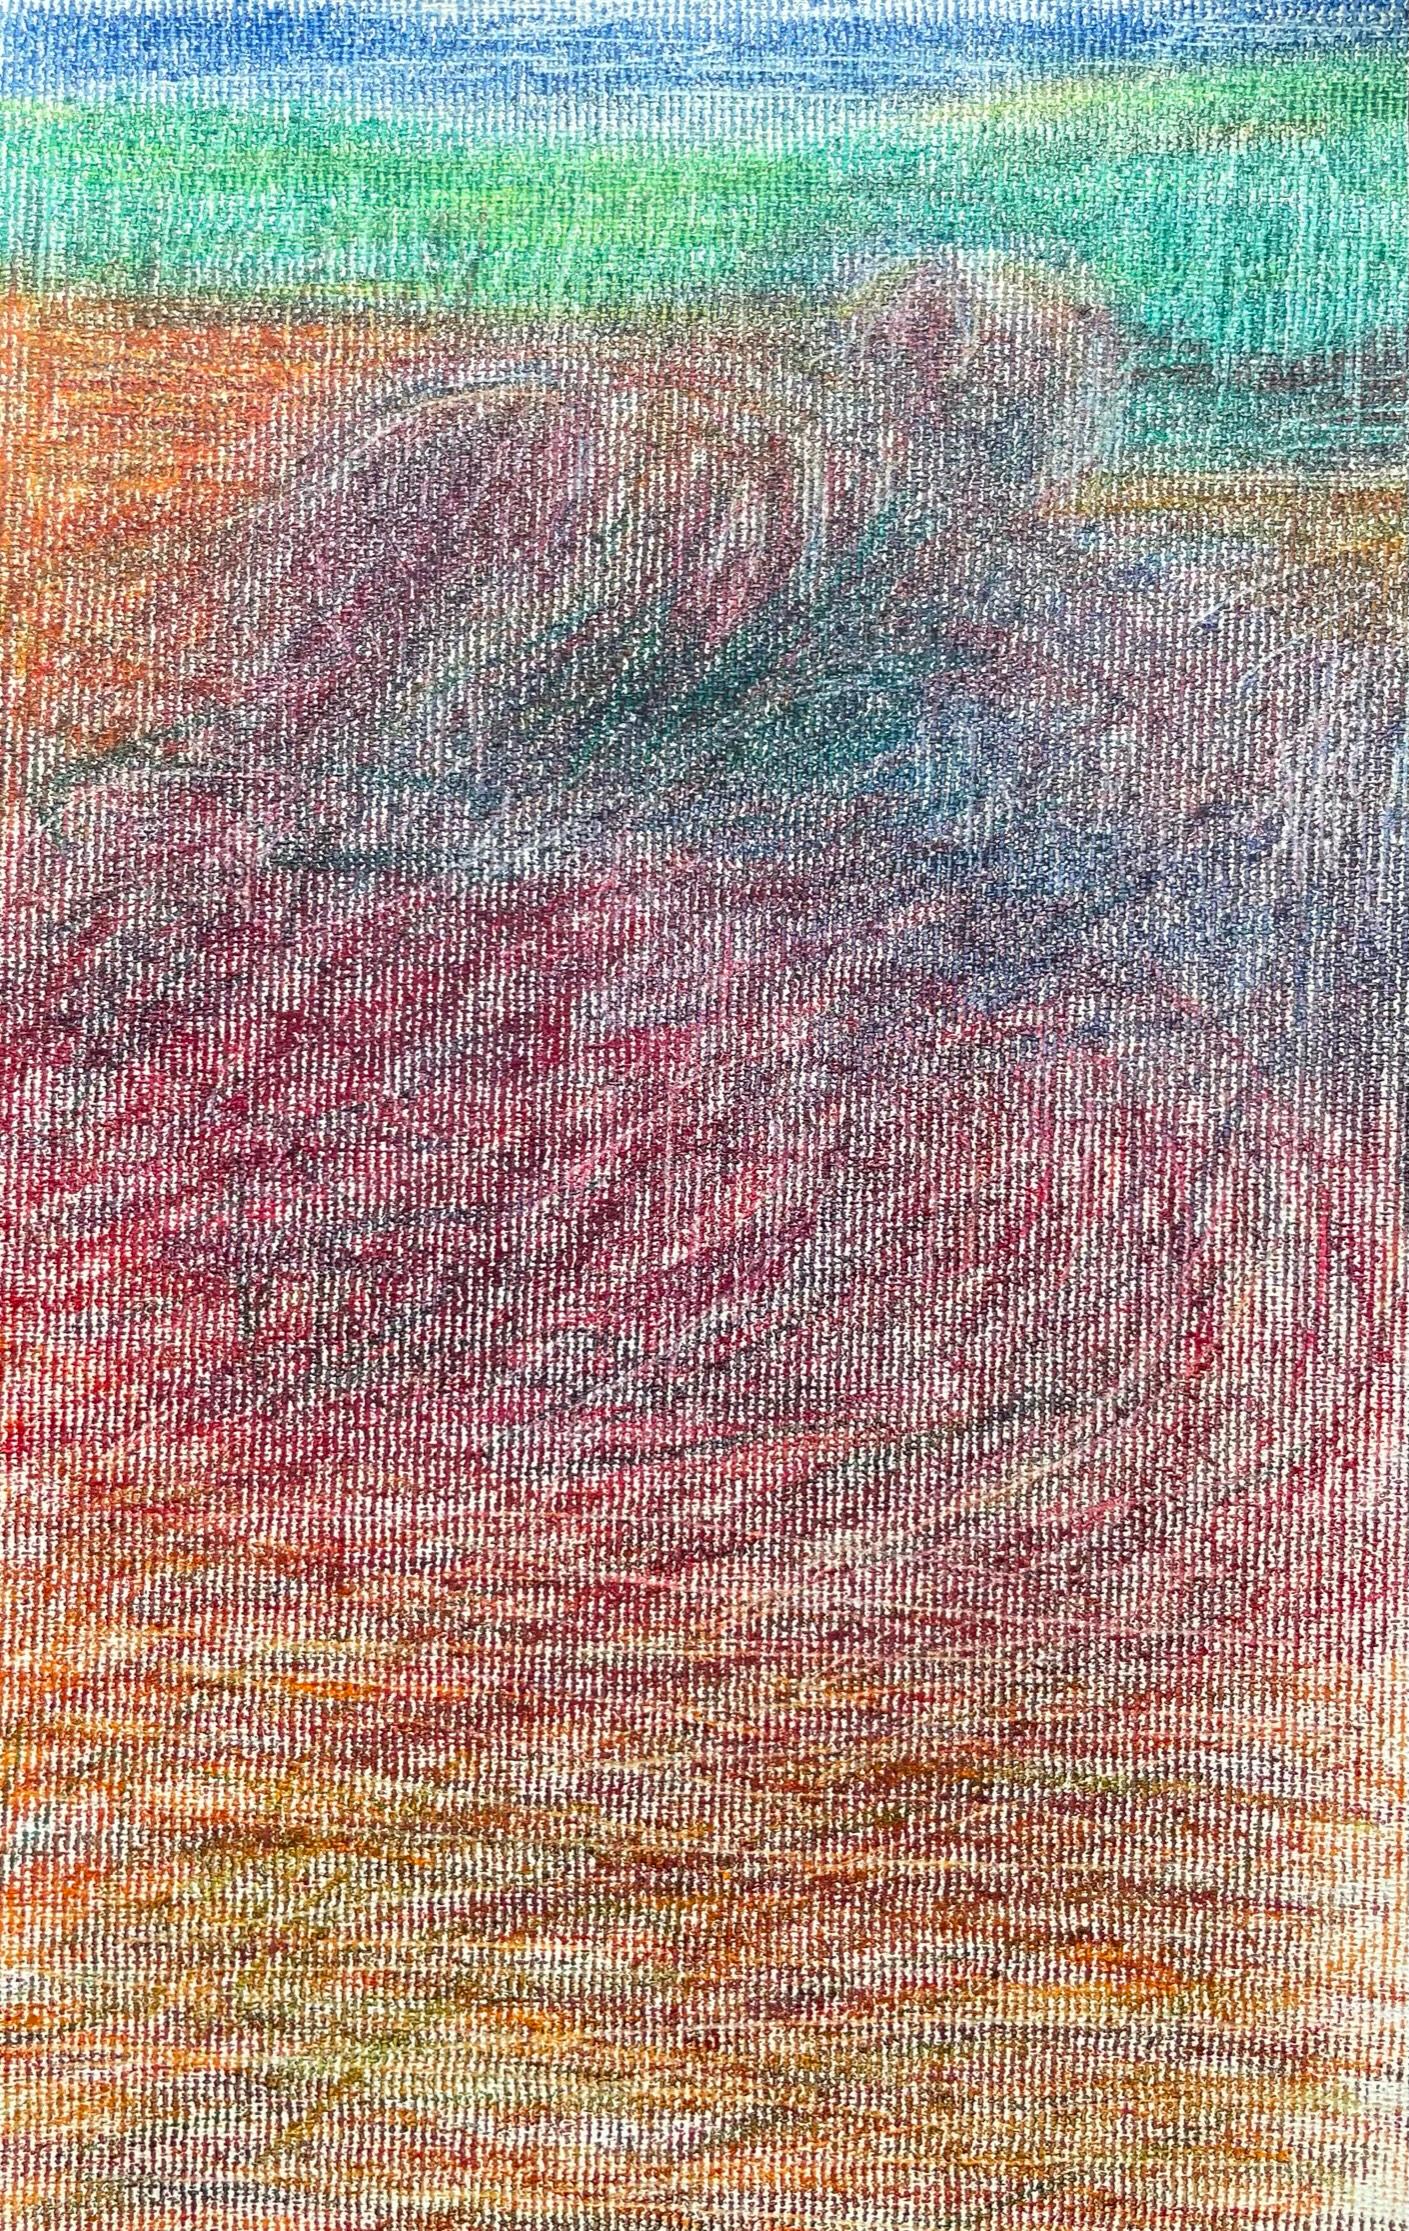 Body in the Field #9 - Landscape, Orange, Red, Coloured pencil 